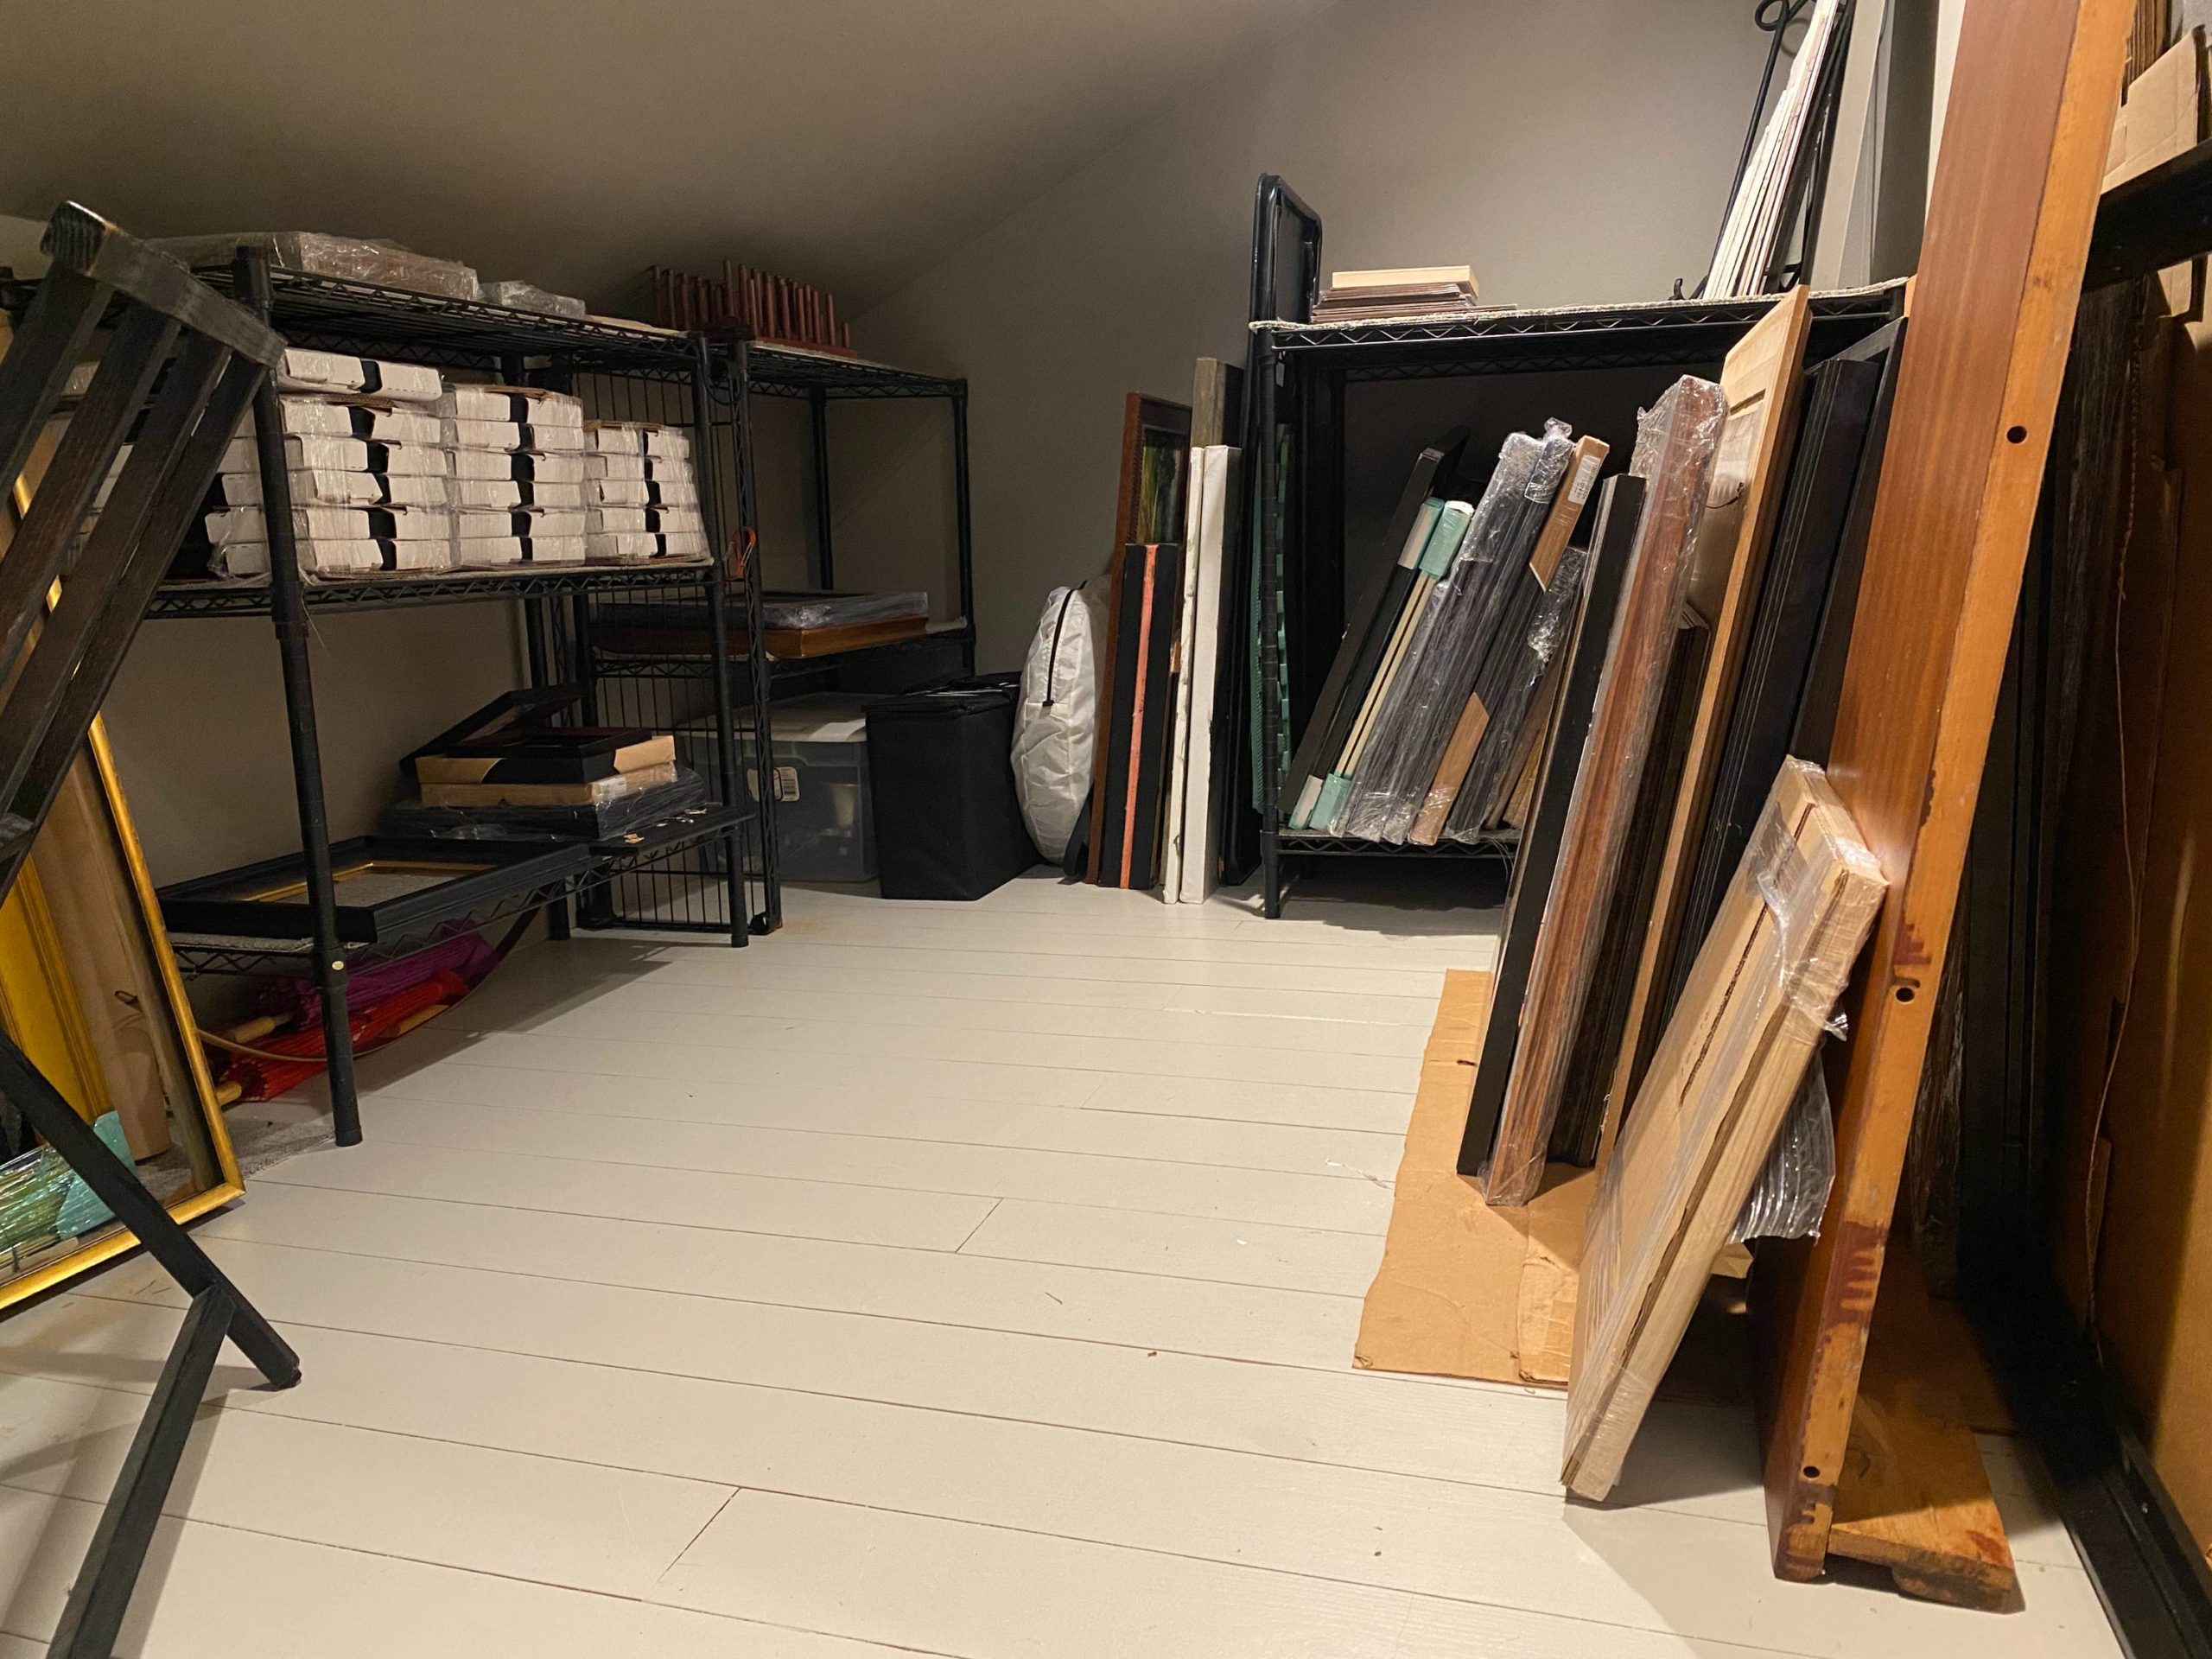 One of the art studio storage areas